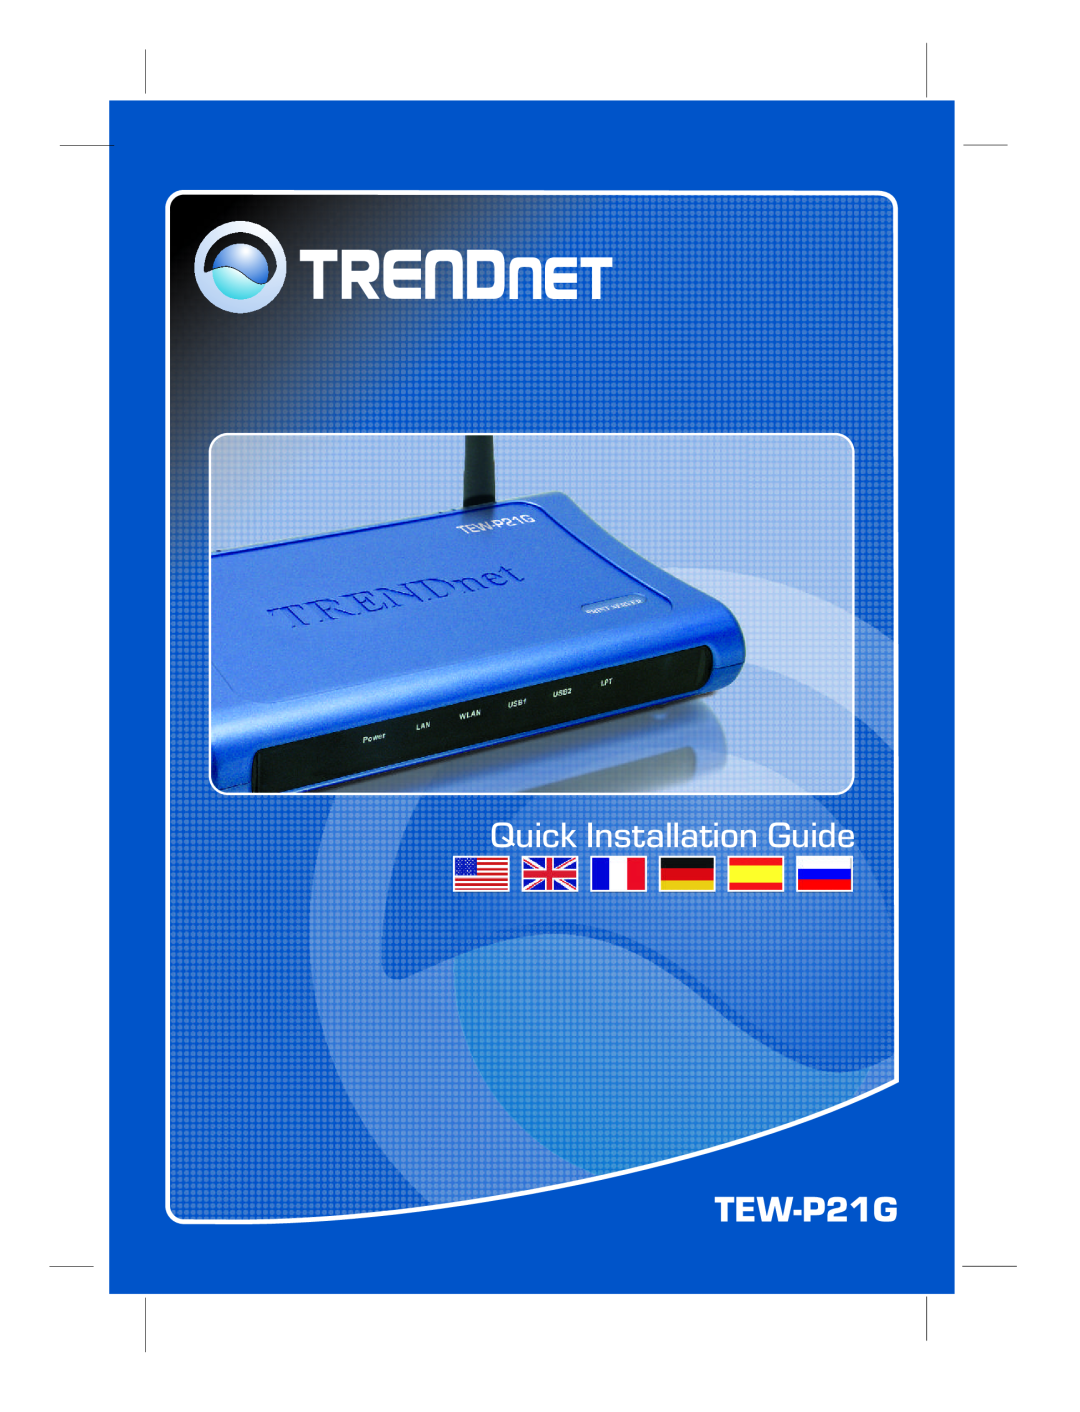 TRENDnet TEW-P21G manual Hardware Installation, Configure the Print Server 1. Double click on PSUtilitySetupv3.13.exe 